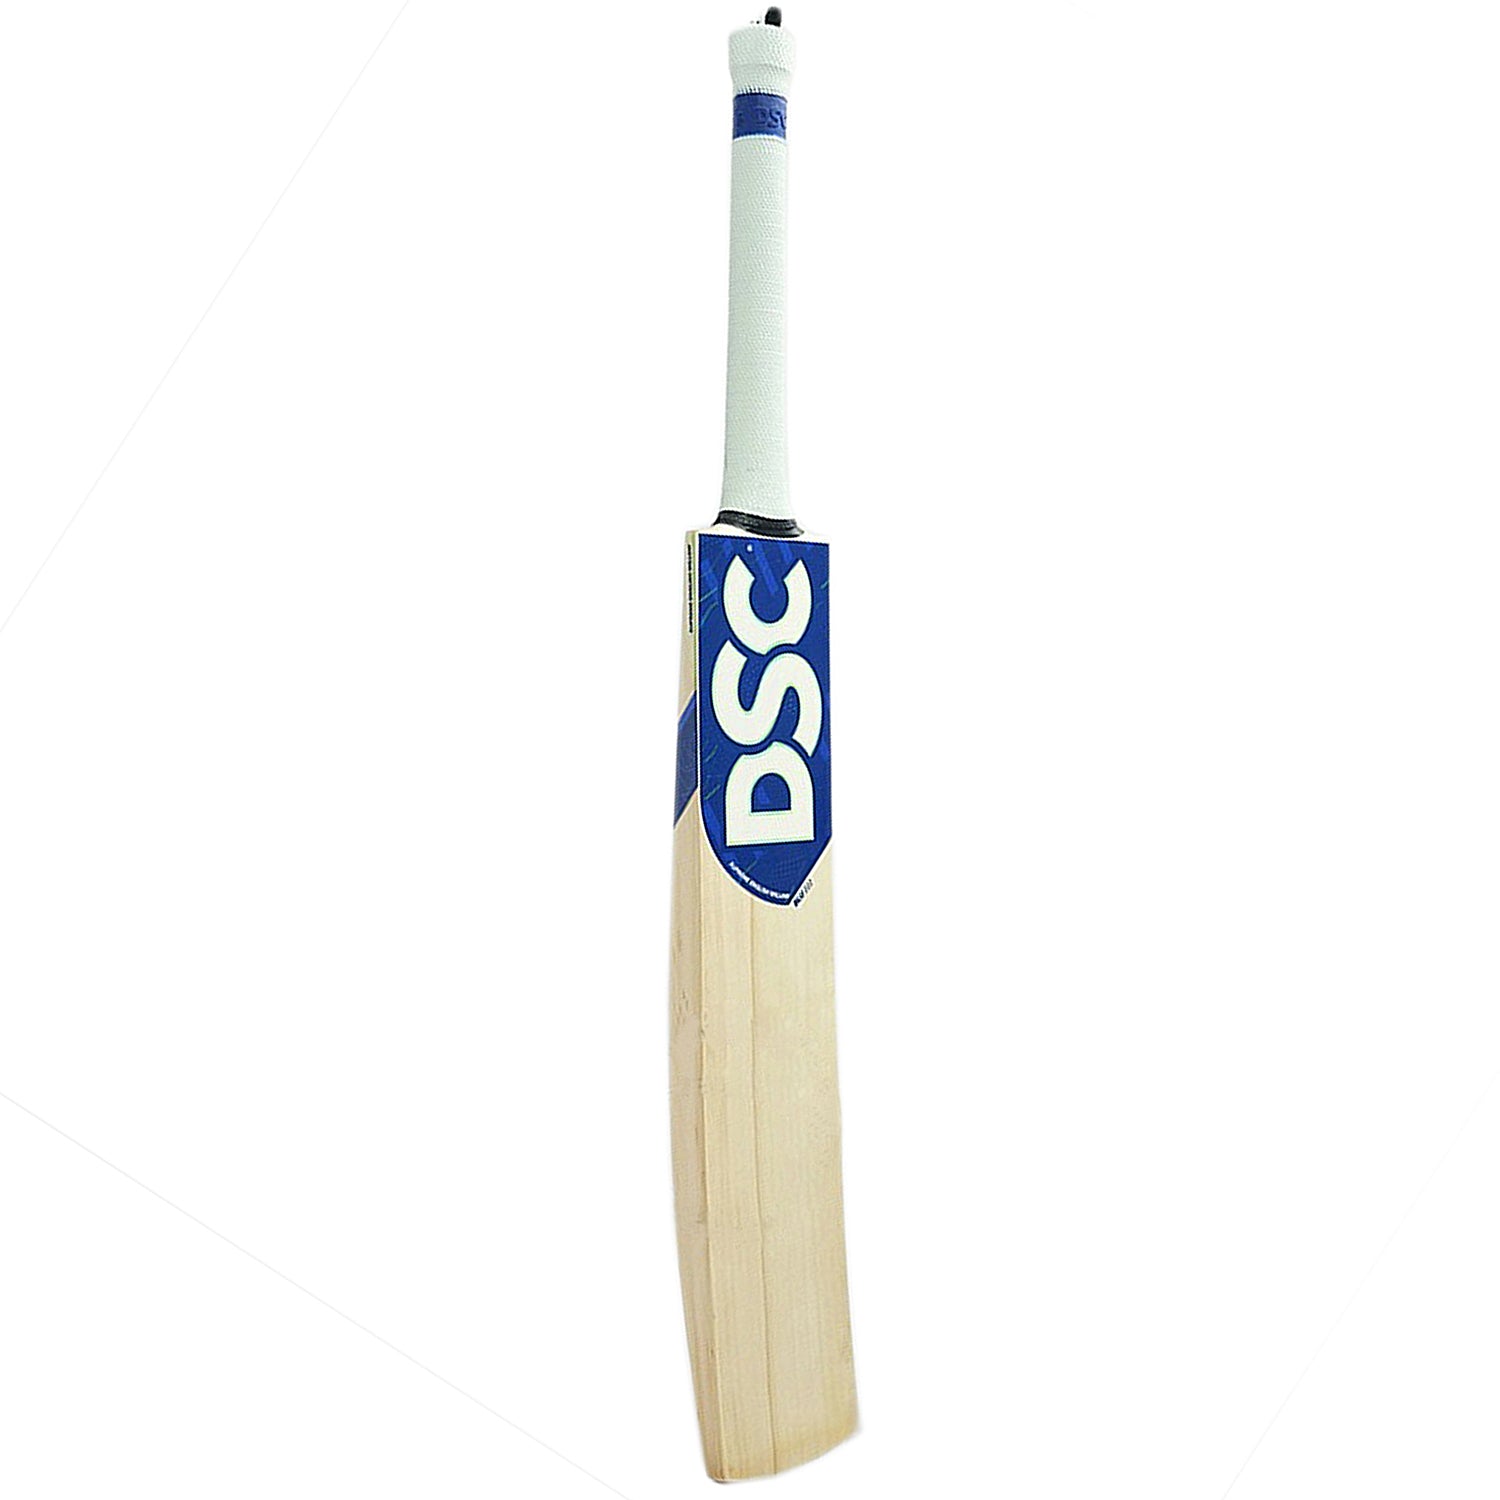 DSC Blu 222 English Willow Cricket Bat - Best Price online Prokicksports.com